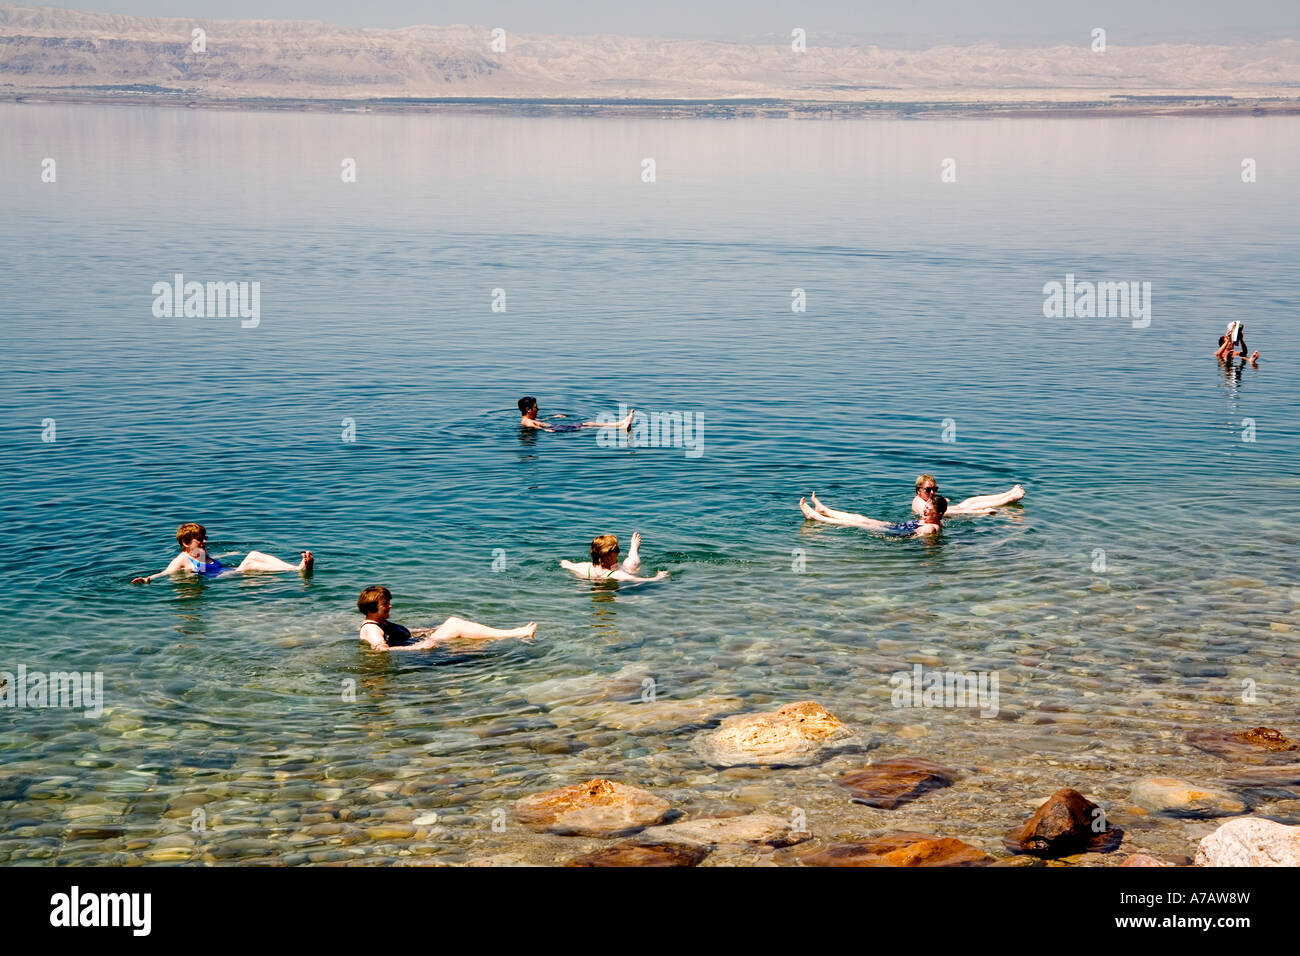 Brace protein horisont Jordan, Dead Sea, Bathers floating due to high salinity Stock Photo - Alamy